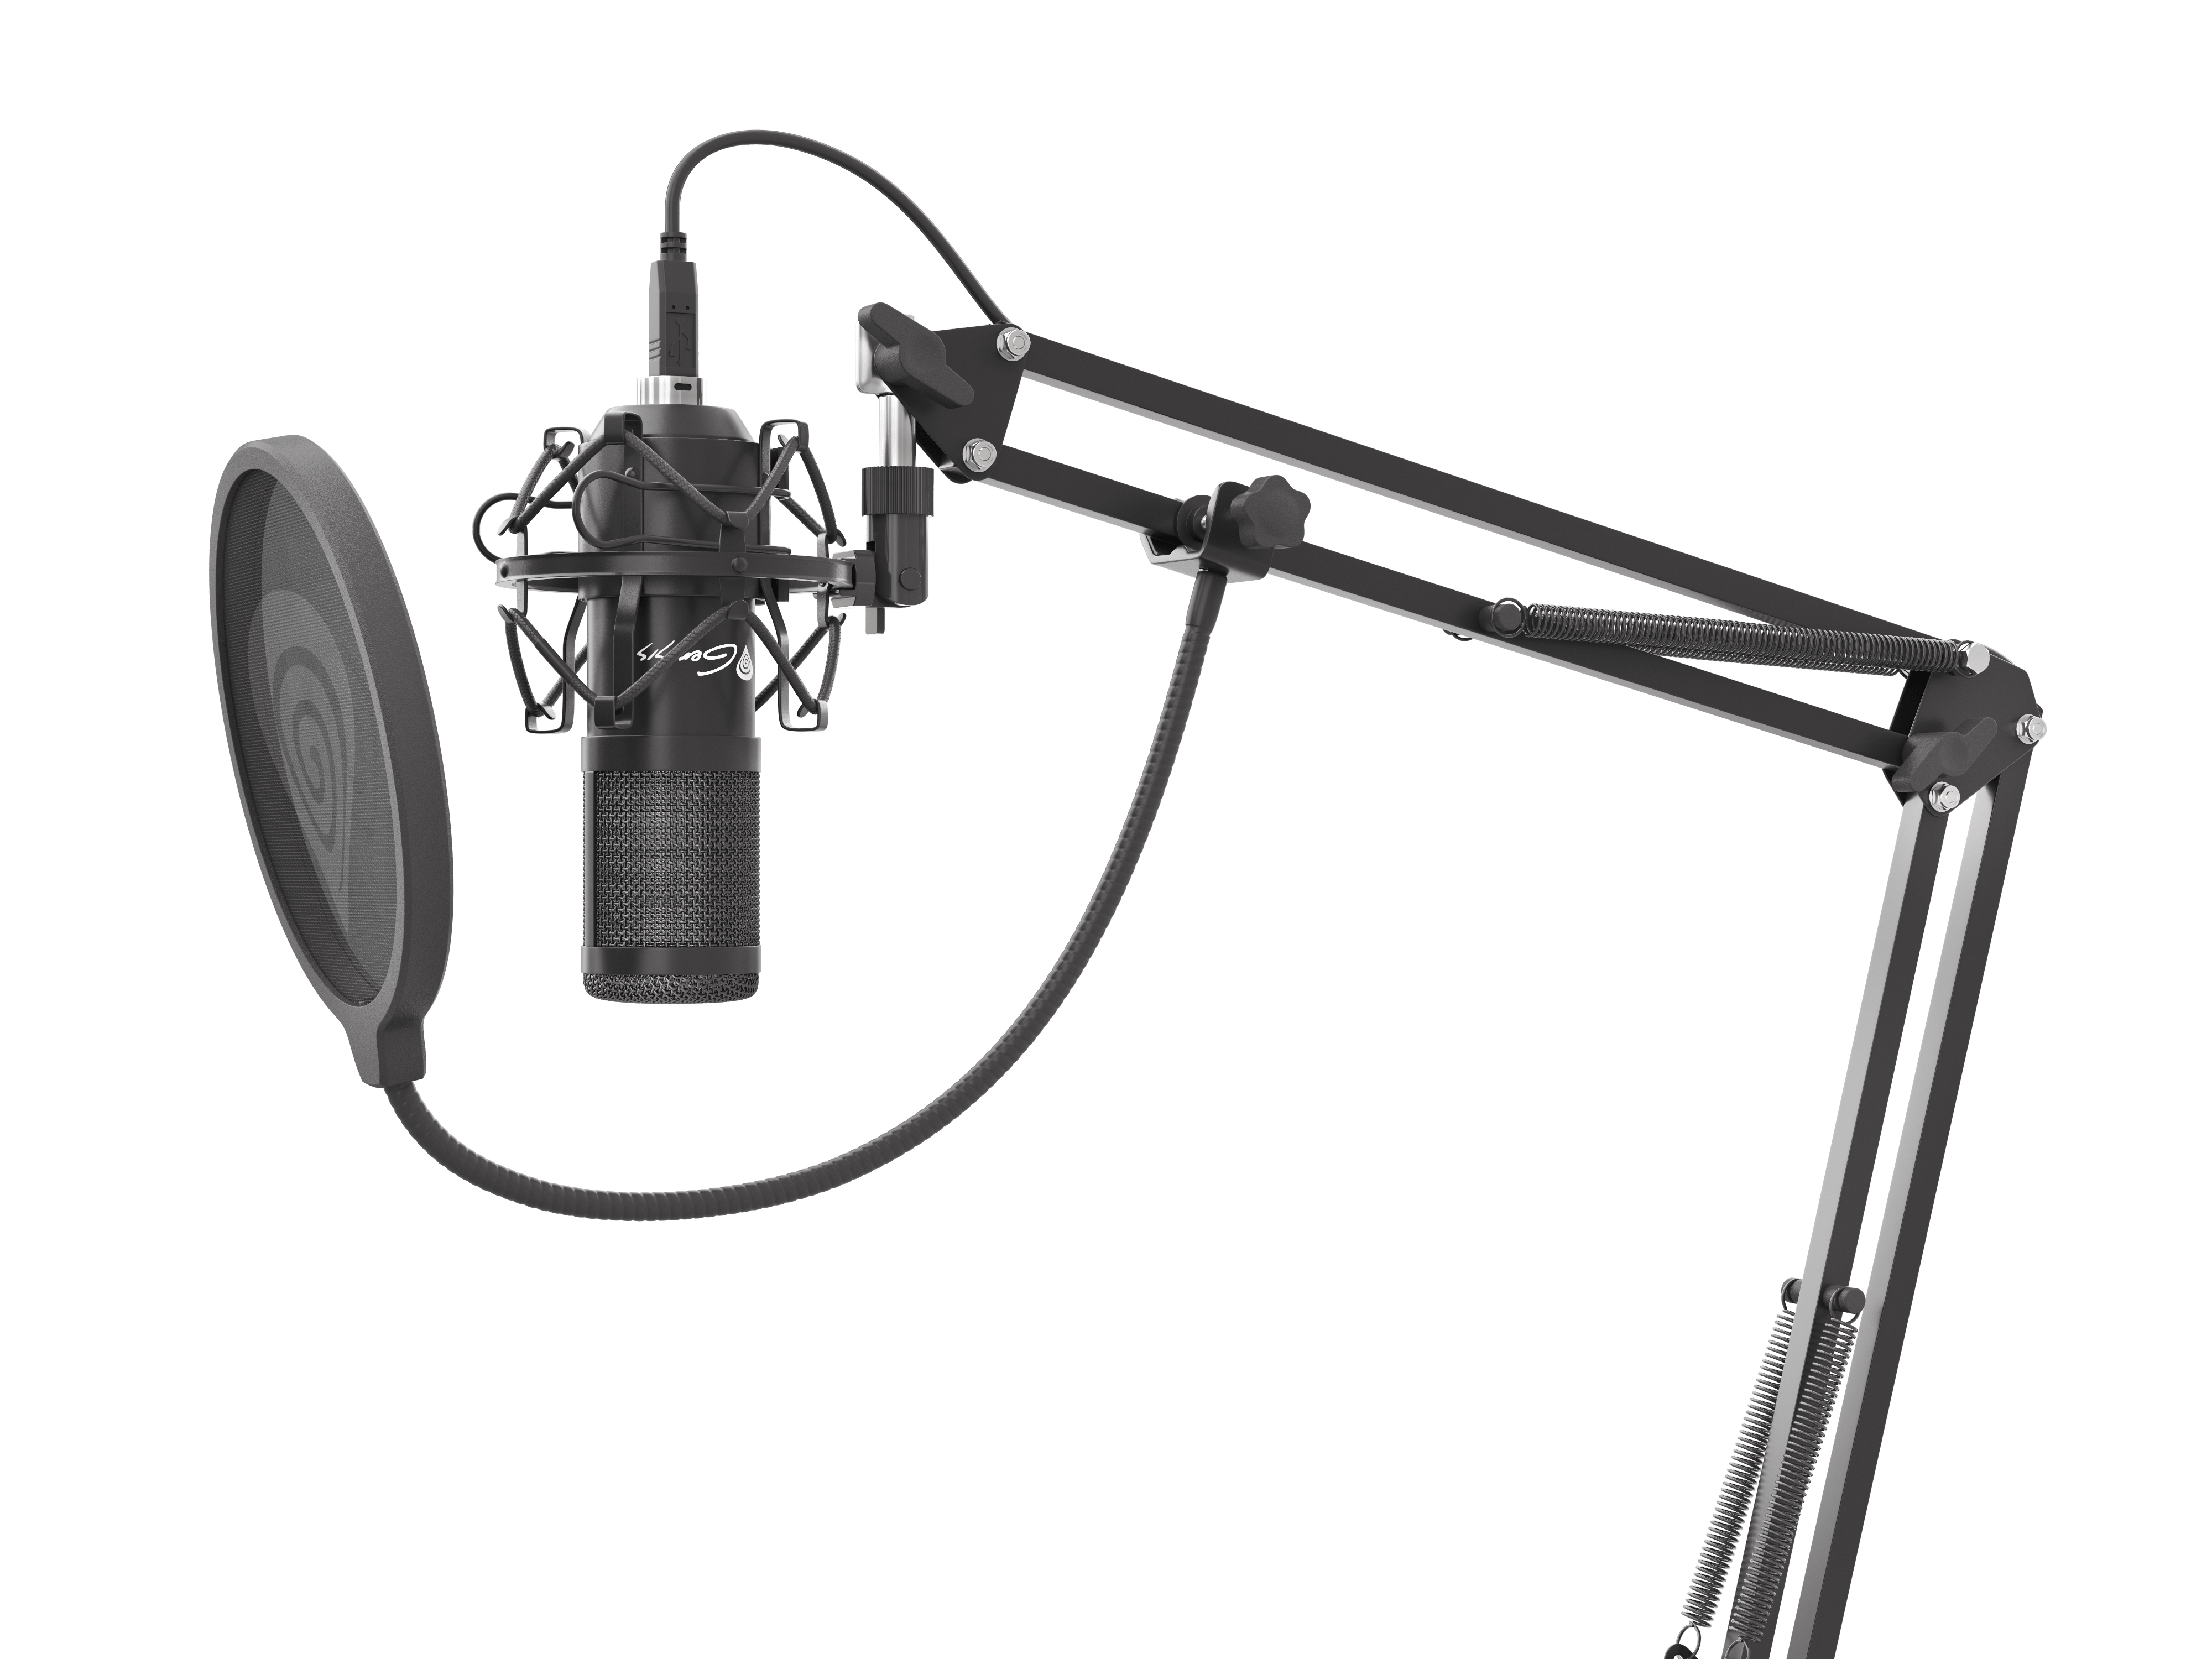 Genesis Radium 400
Jaki mikrofon kupić